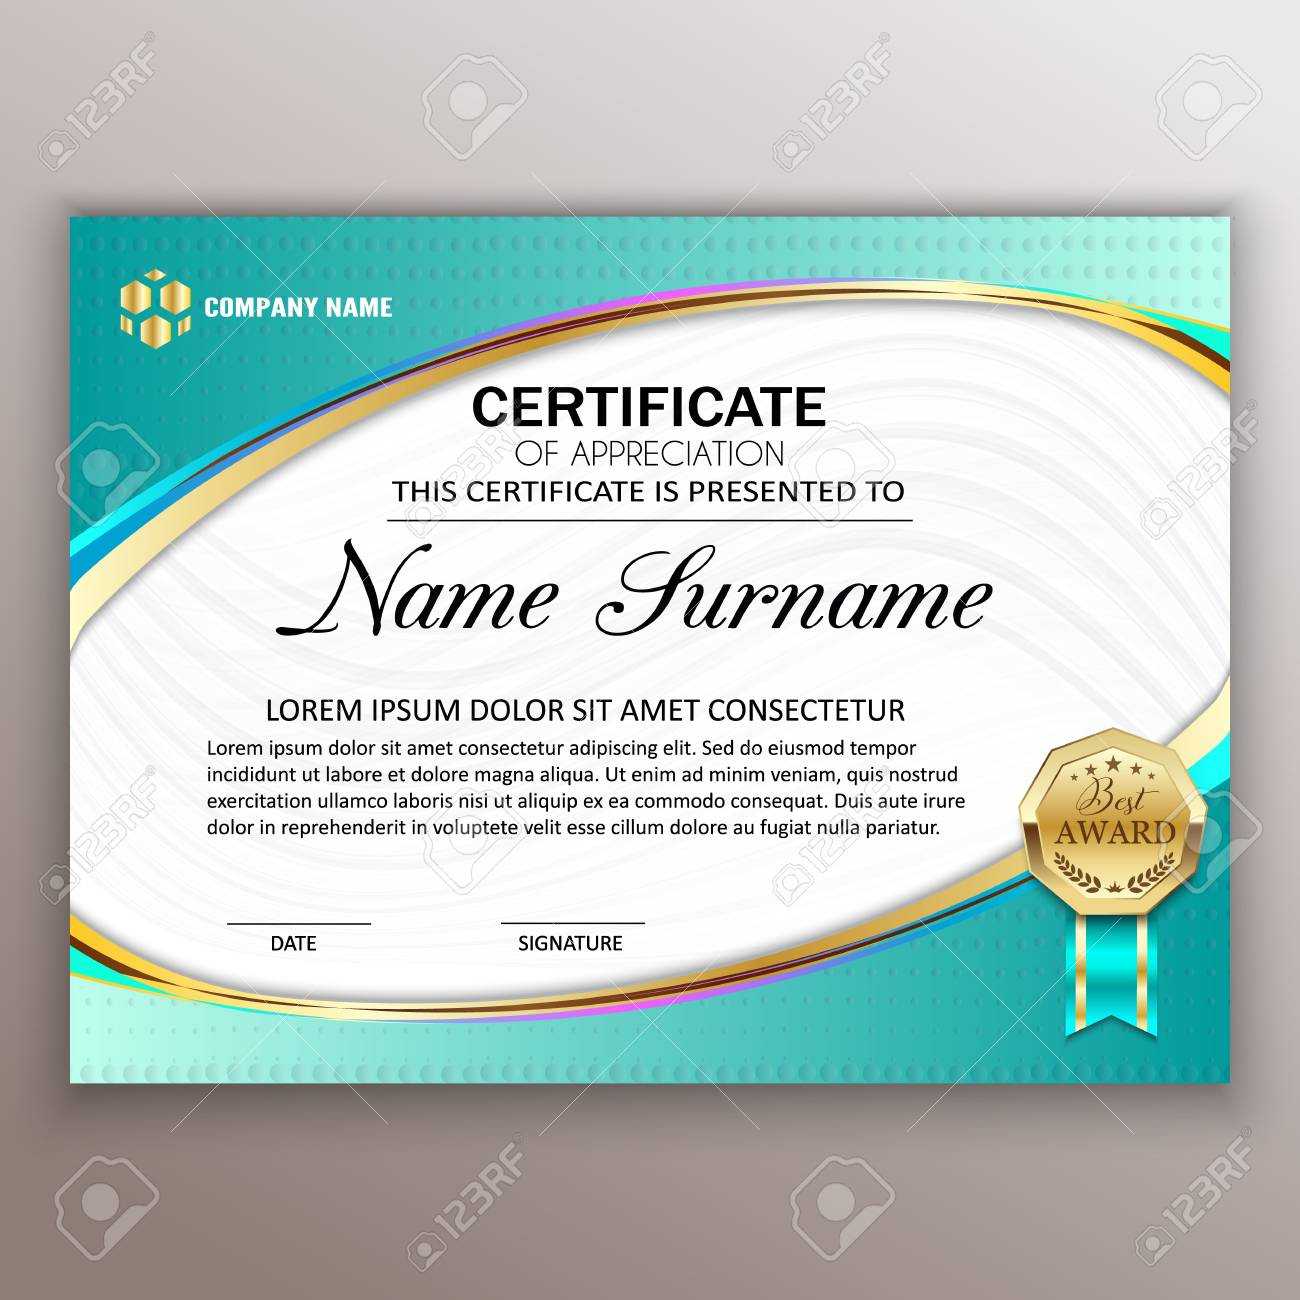 Best Award Certificate Design - Veppe For Beautiful Certificate Templates